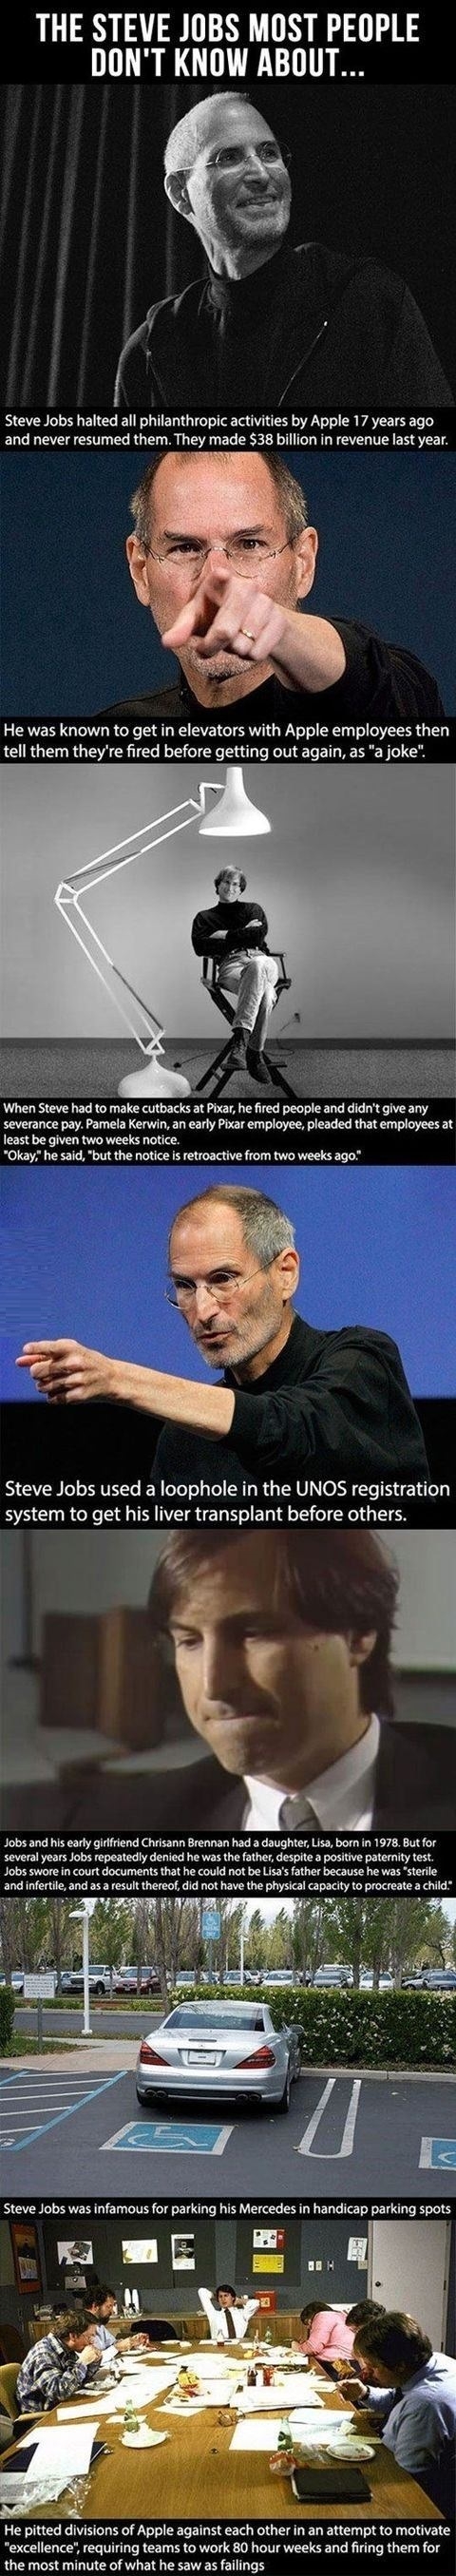 Steve Jobs facts